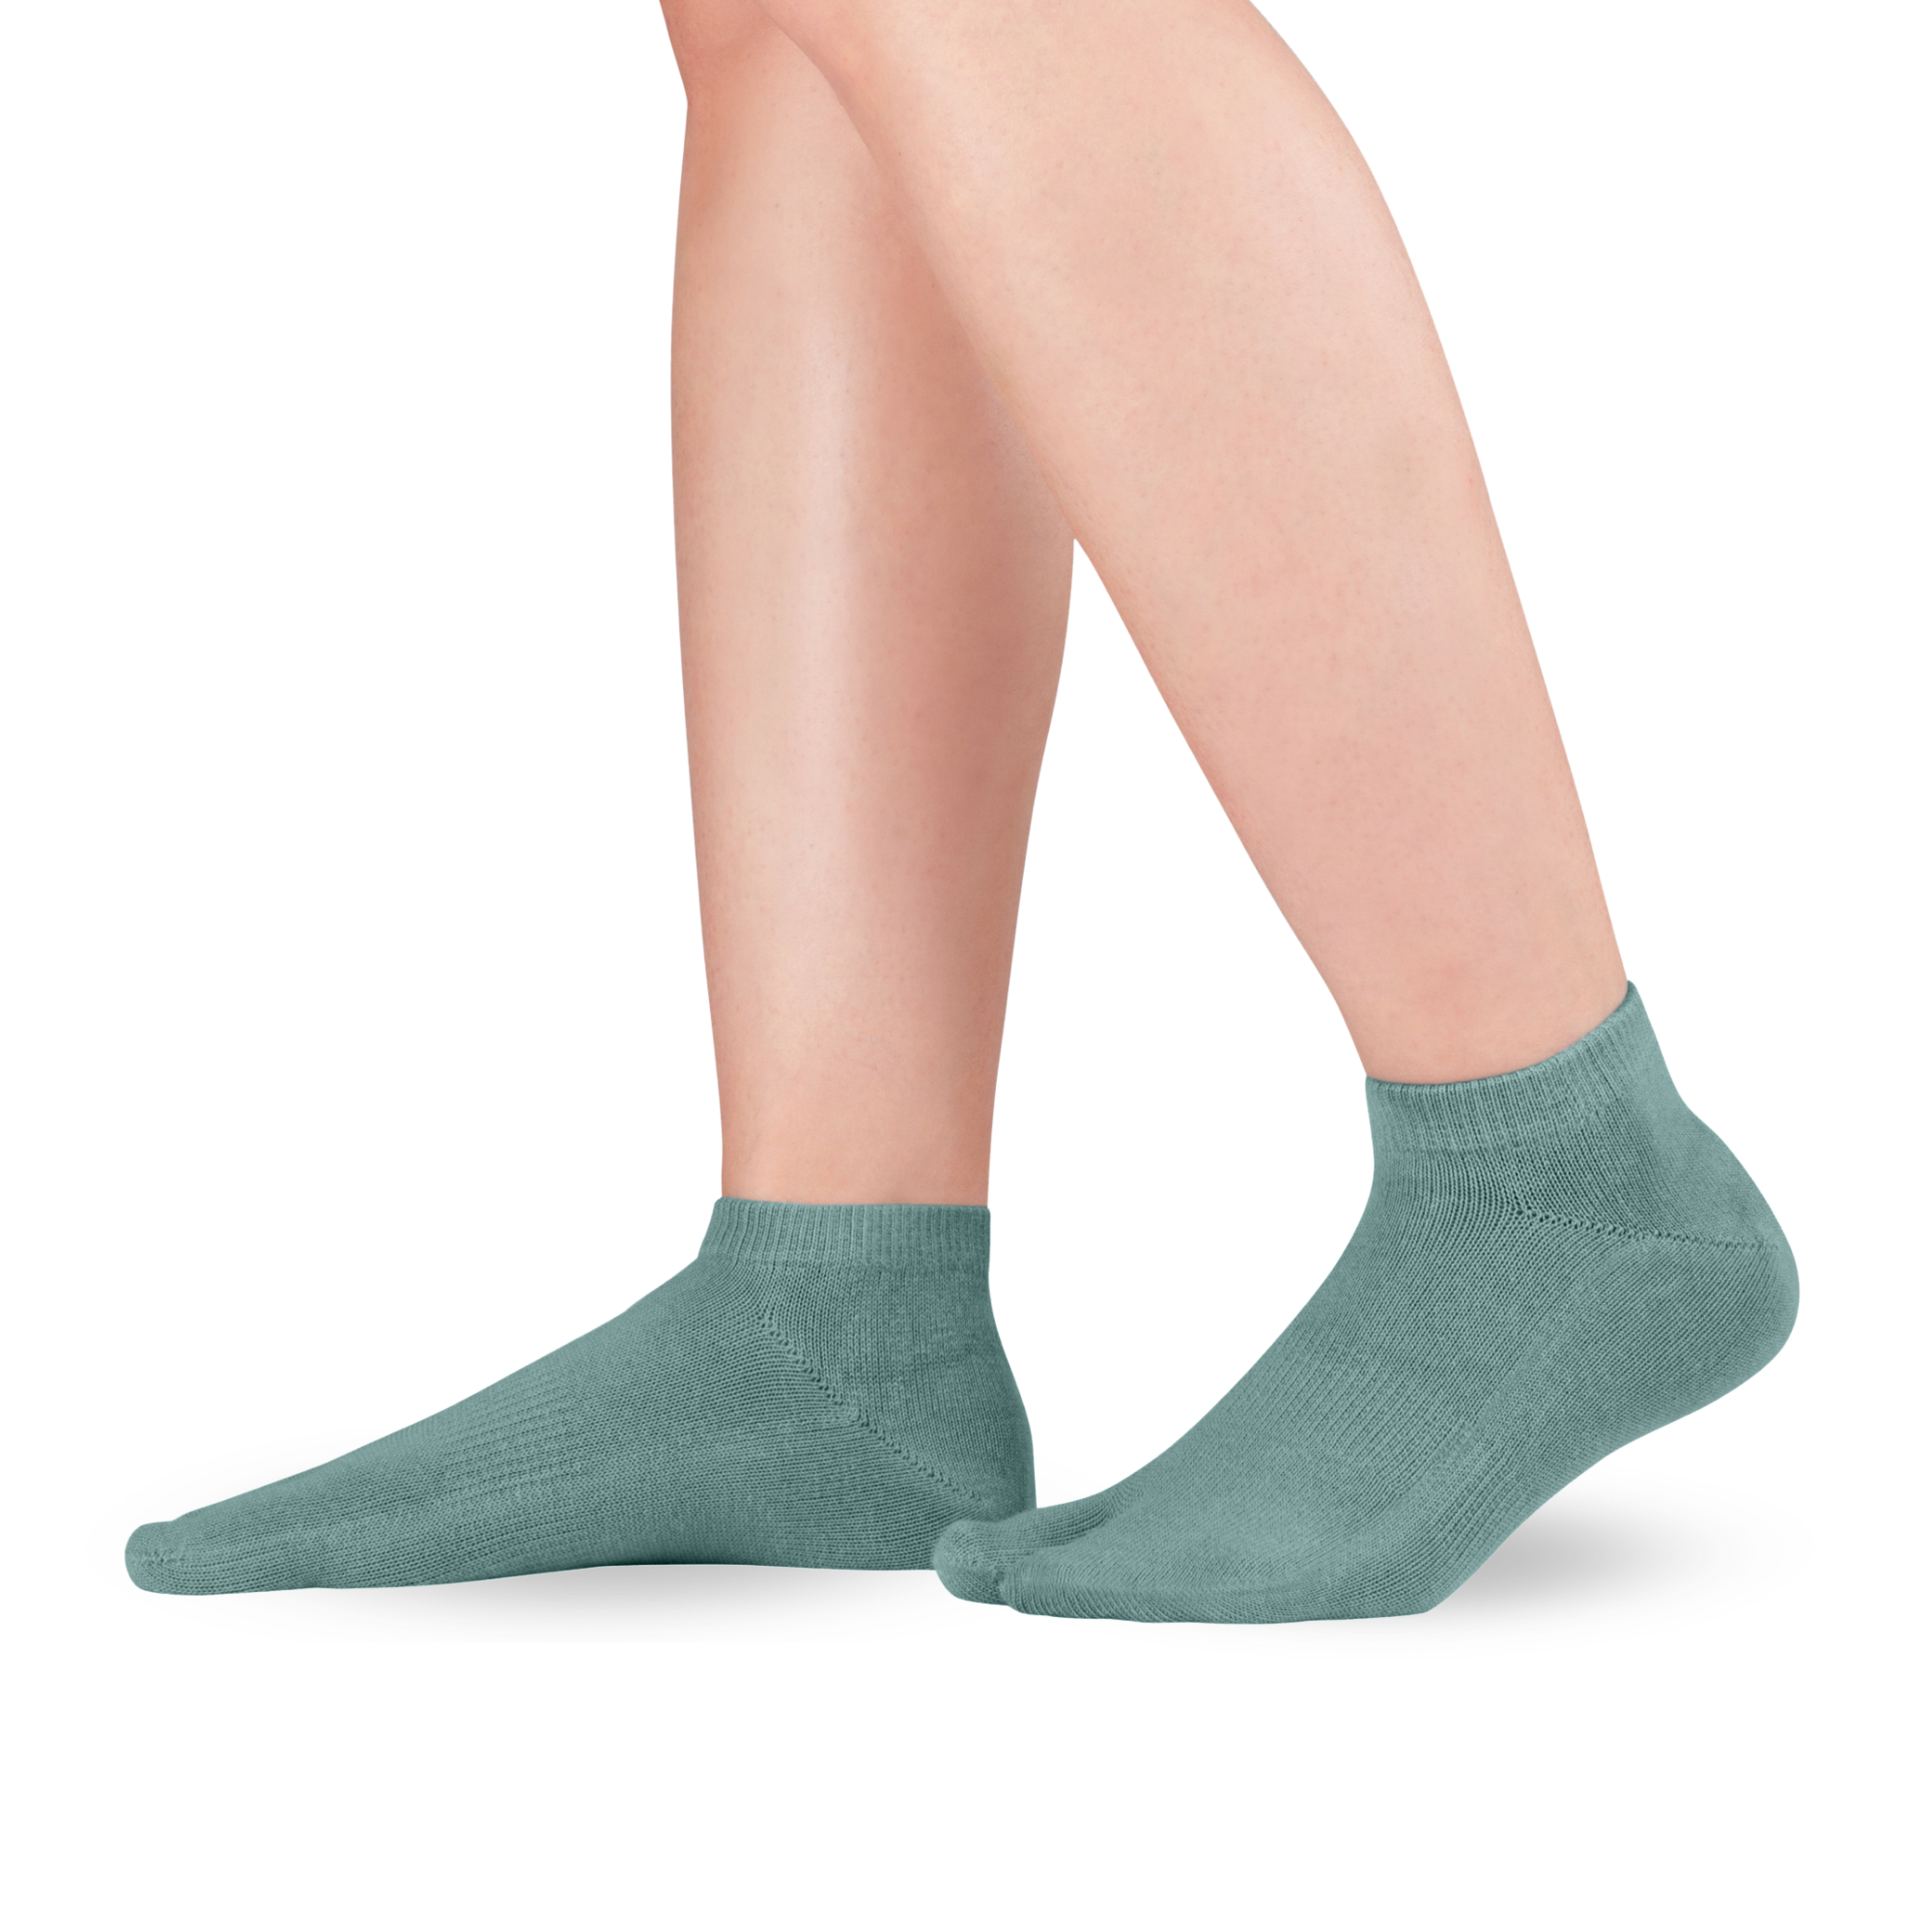 Knitido Tabi Socks Sneaker, kurze Baumwoll-Tabisocken mit einzelner großer Zehe graublau